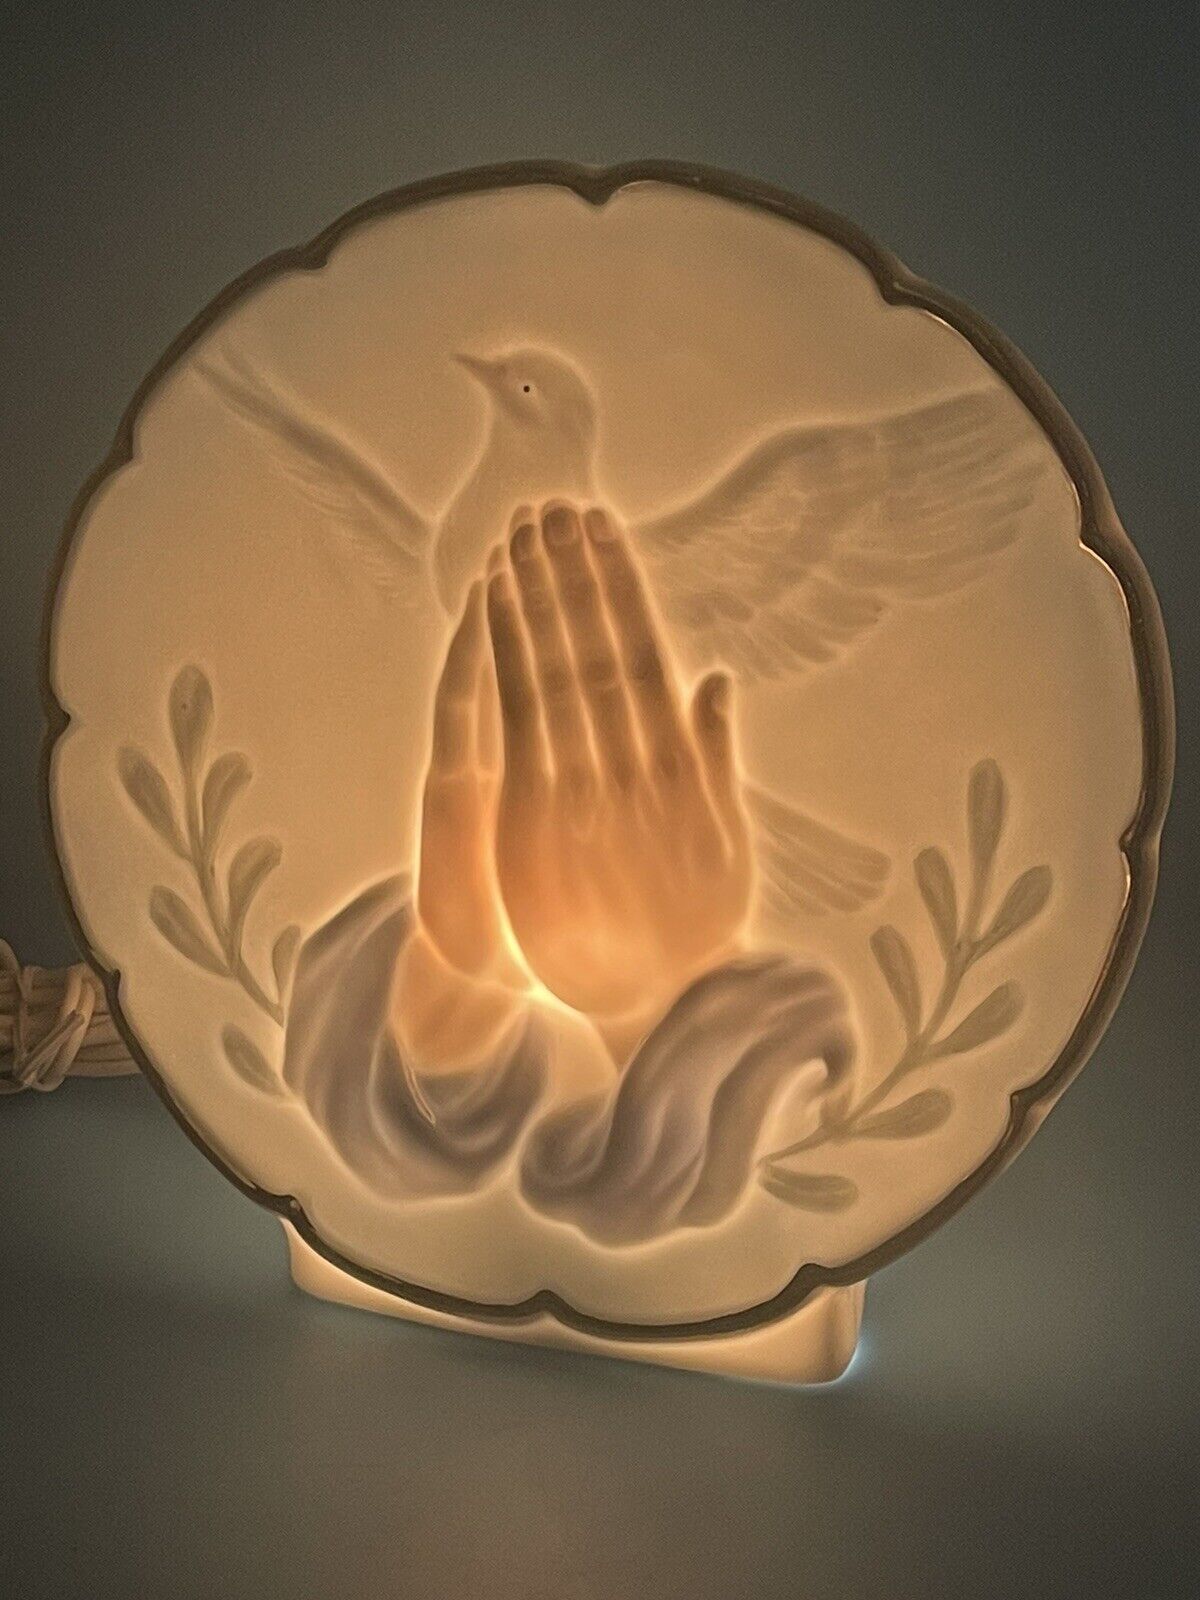 LIGHTED PRAYING HANDS PLATE DECOR-NEW OPEN BOX